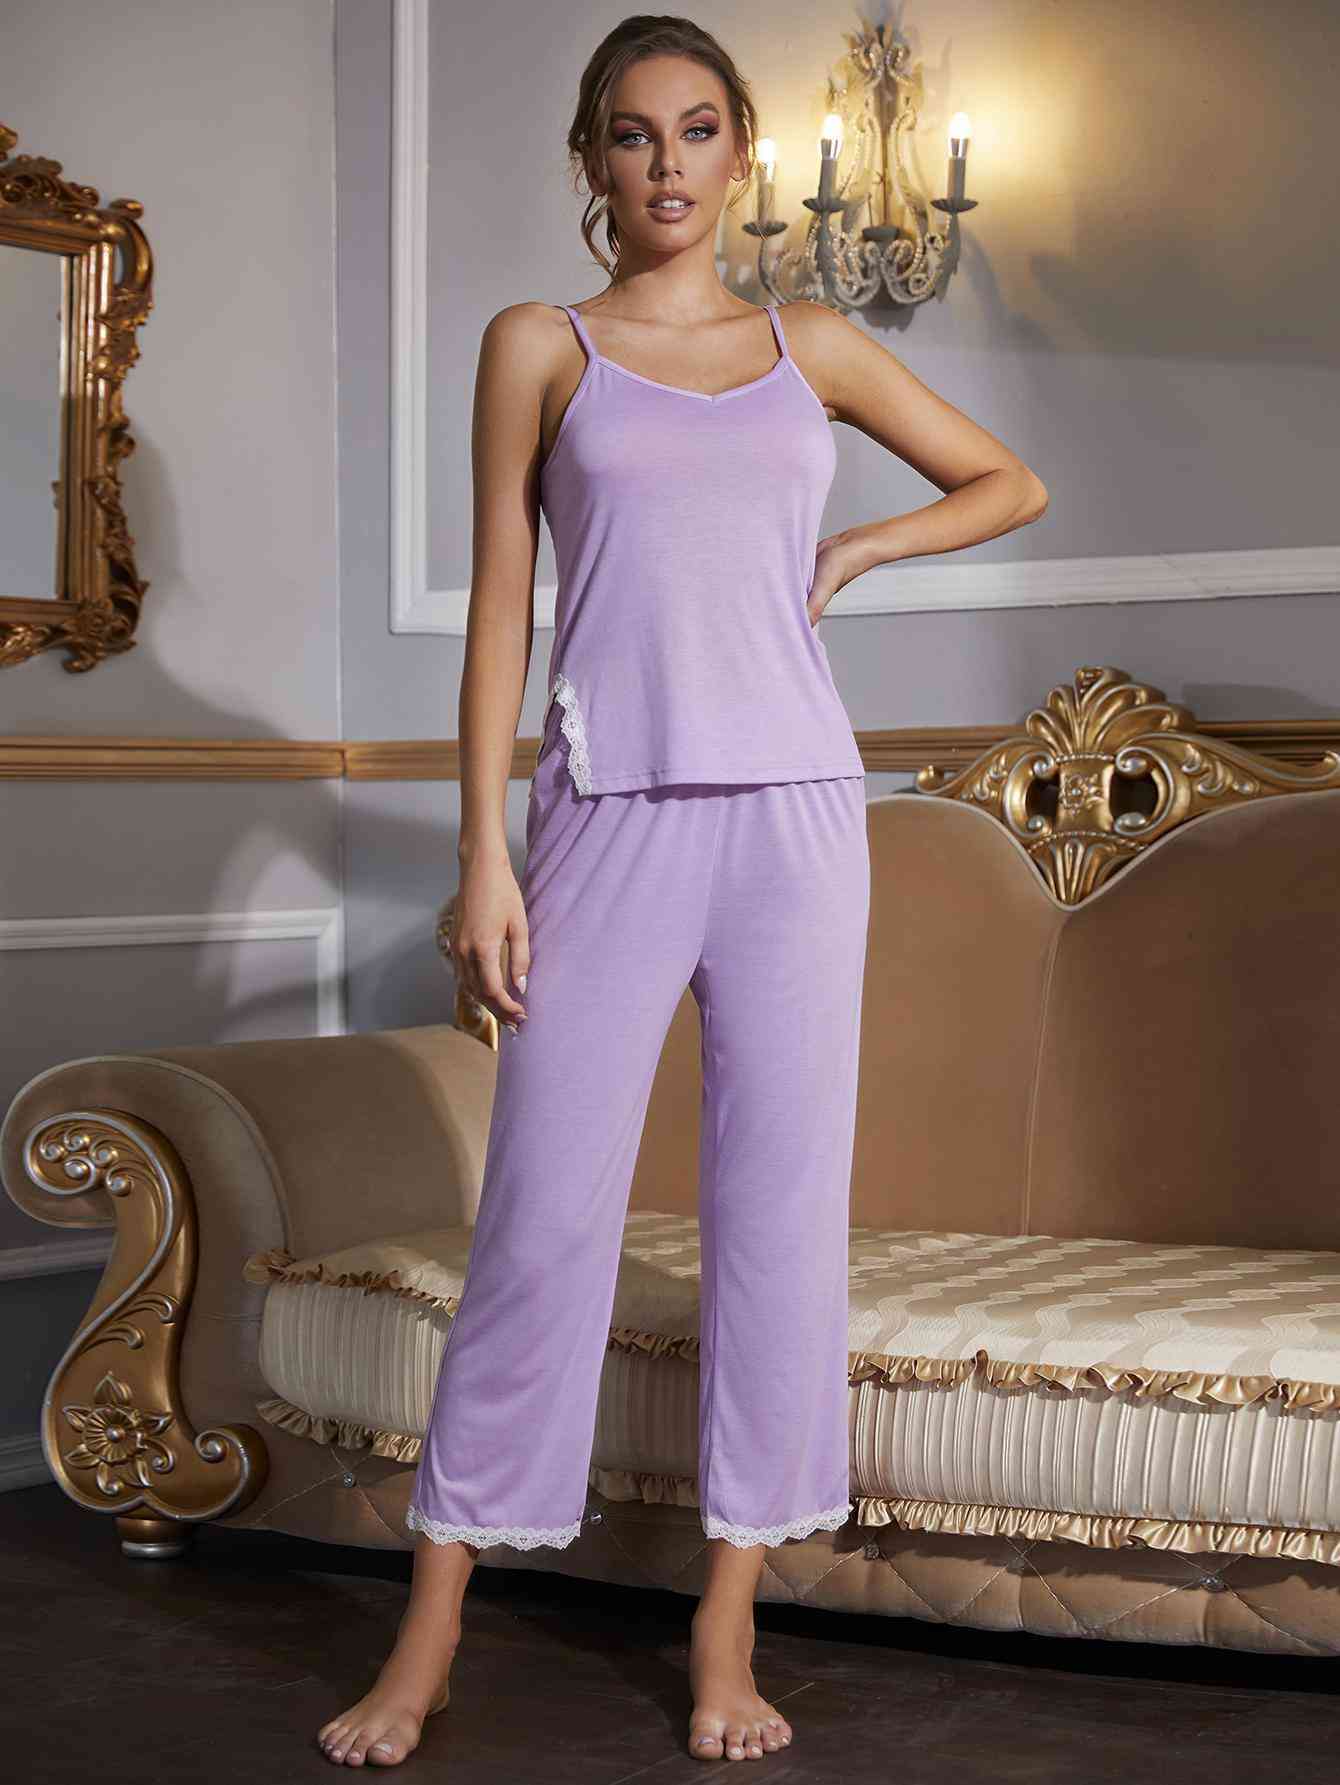 Dim Gray V-Neck Lace Trim Slit Cami and Pants Pajama Set Sentient Beauty Fashions Apparel & Accessories